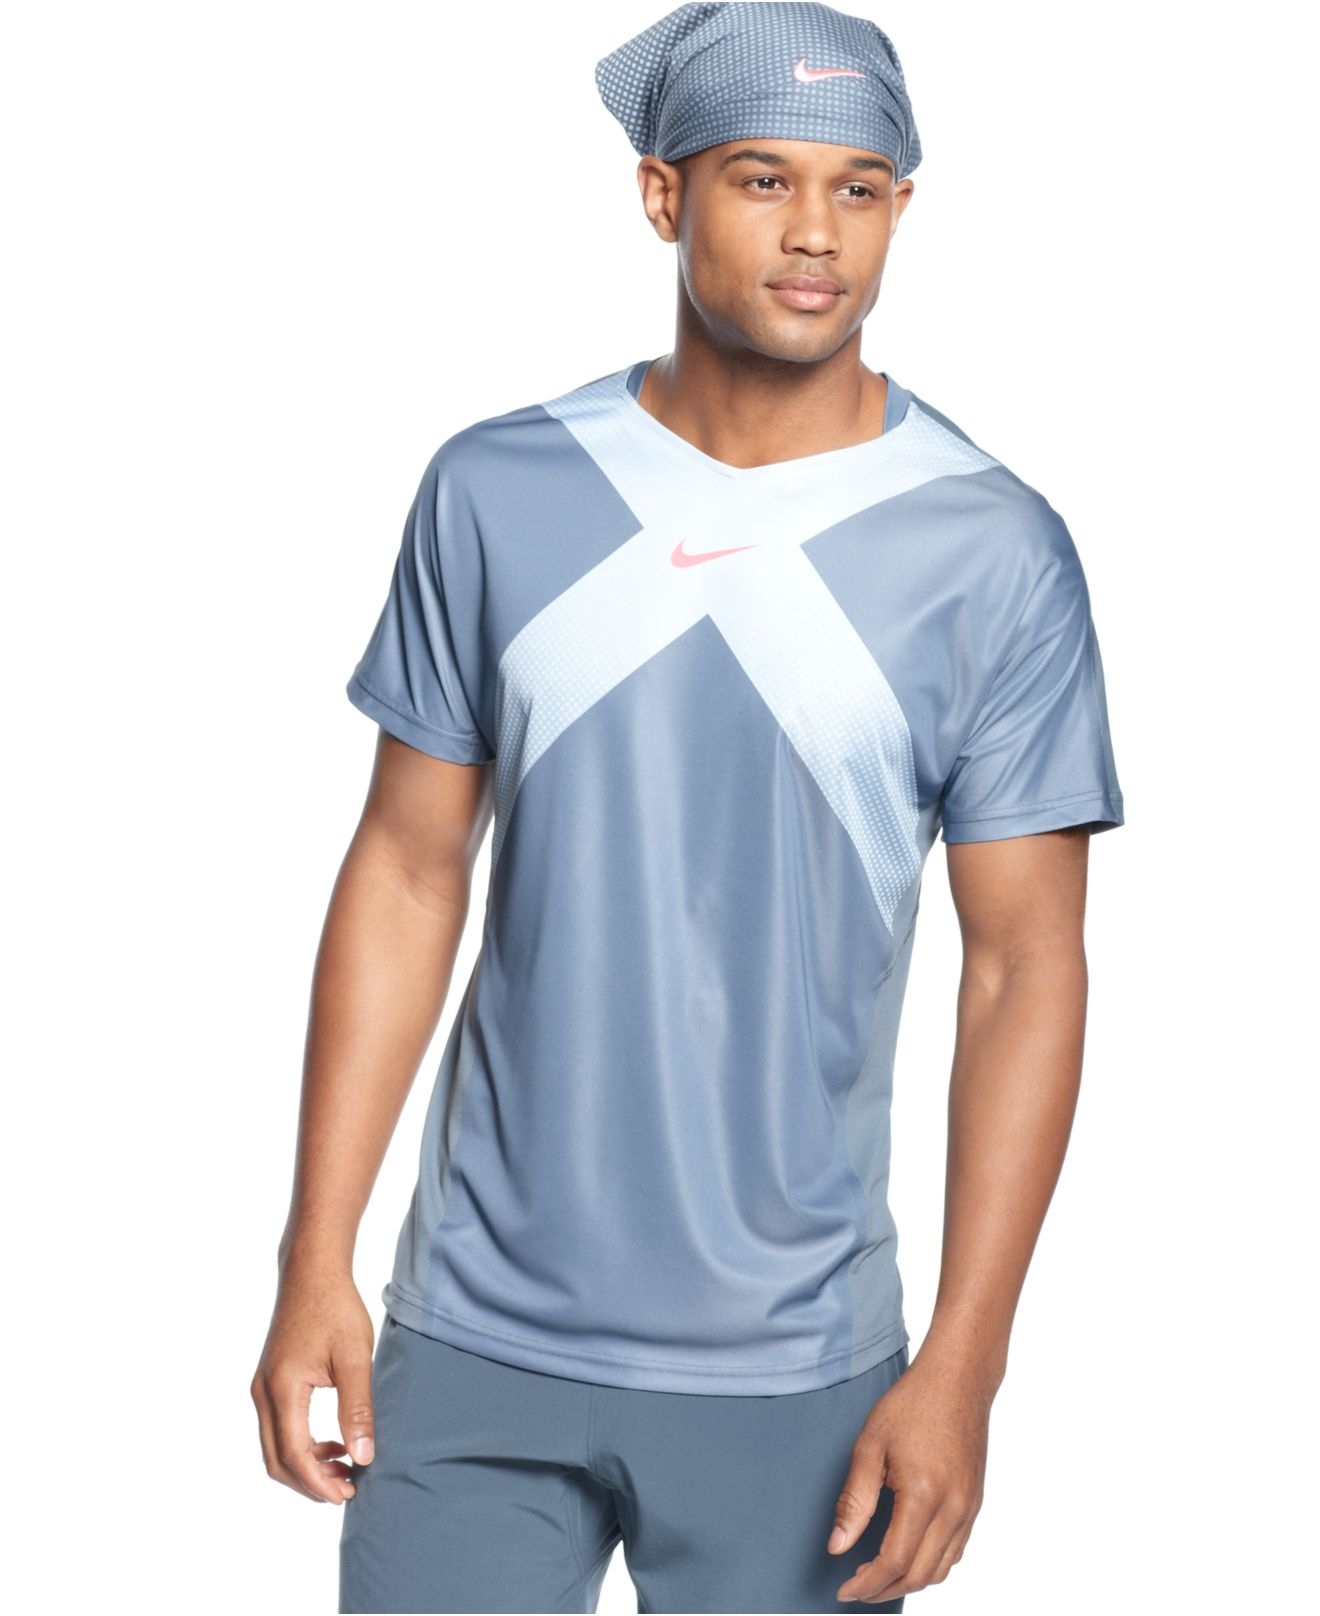 Nike Tennis Shirt